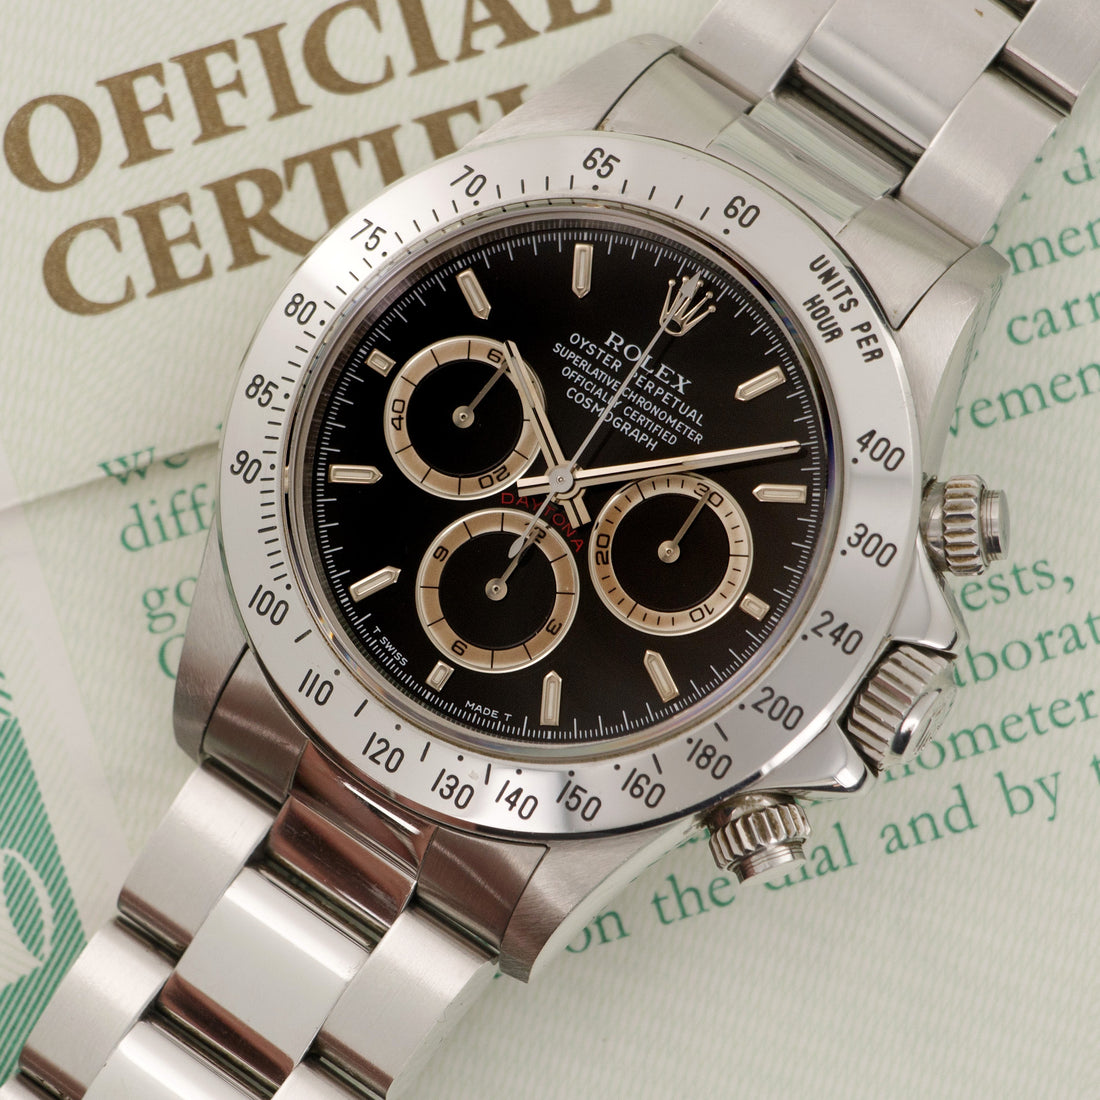 Rolex Daytona Cosmograph Patrizzi Watch Ref. 16520 with Original Warranty Paper